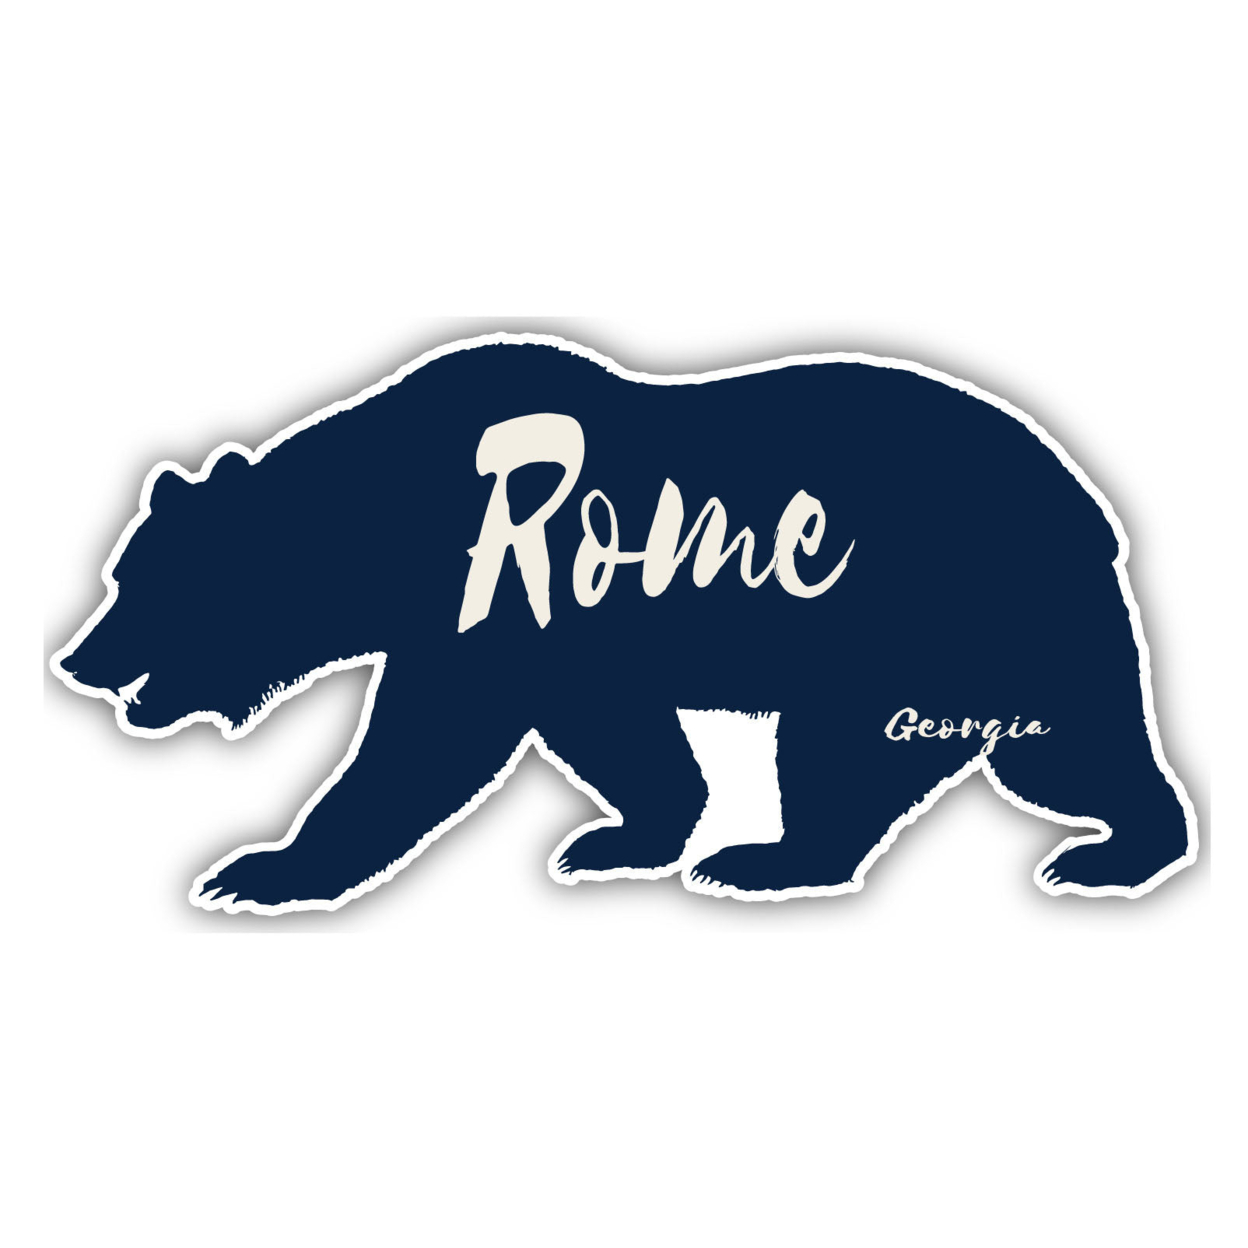 Rome Georgia Souvenir Decorative Stickers (Choose Theme And Size) - Single Unit, 2-Inch, Bear